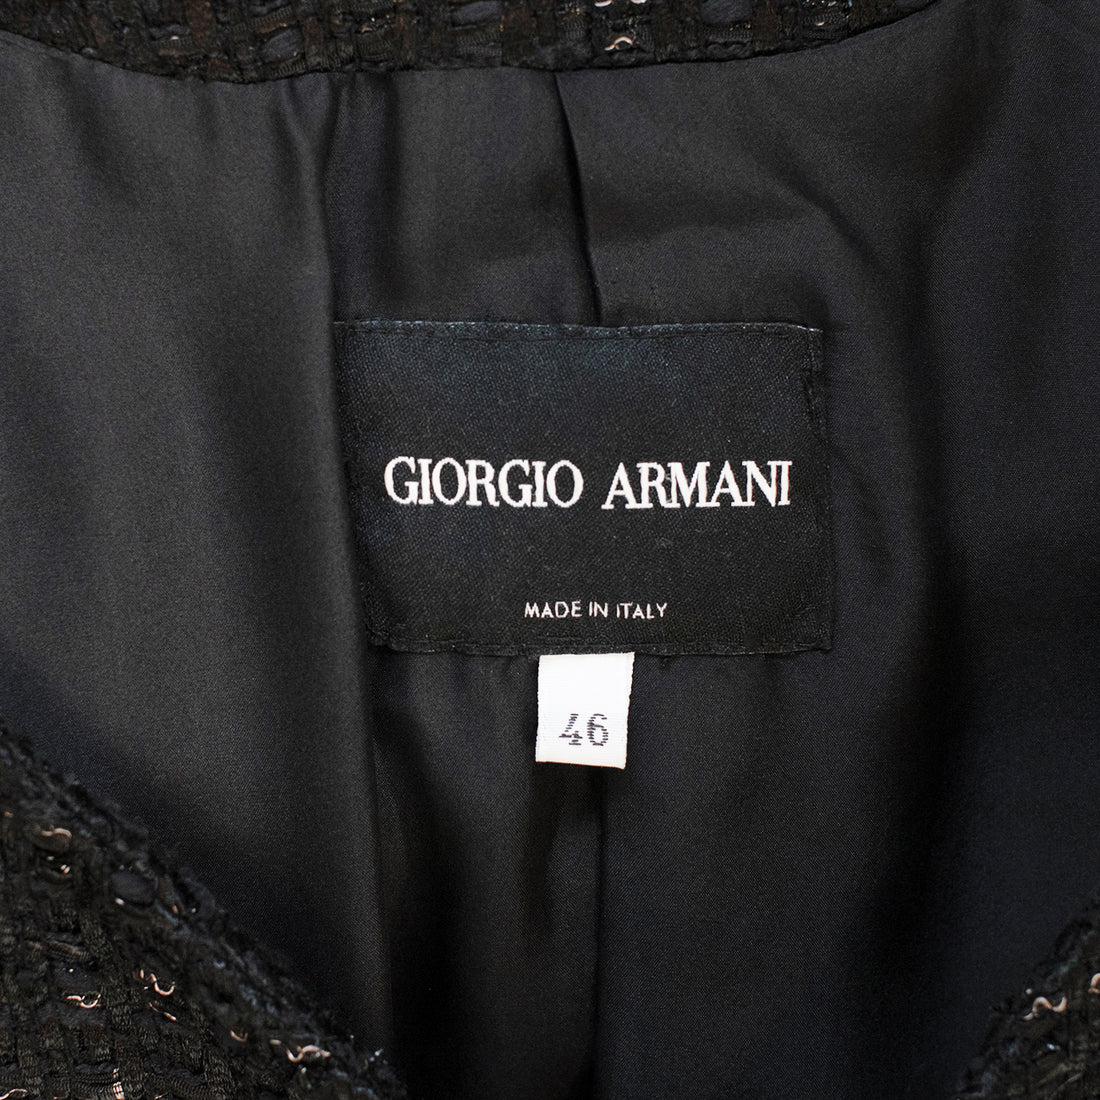 Giorgio Armani Vintage Jacke mit Lackleder Details